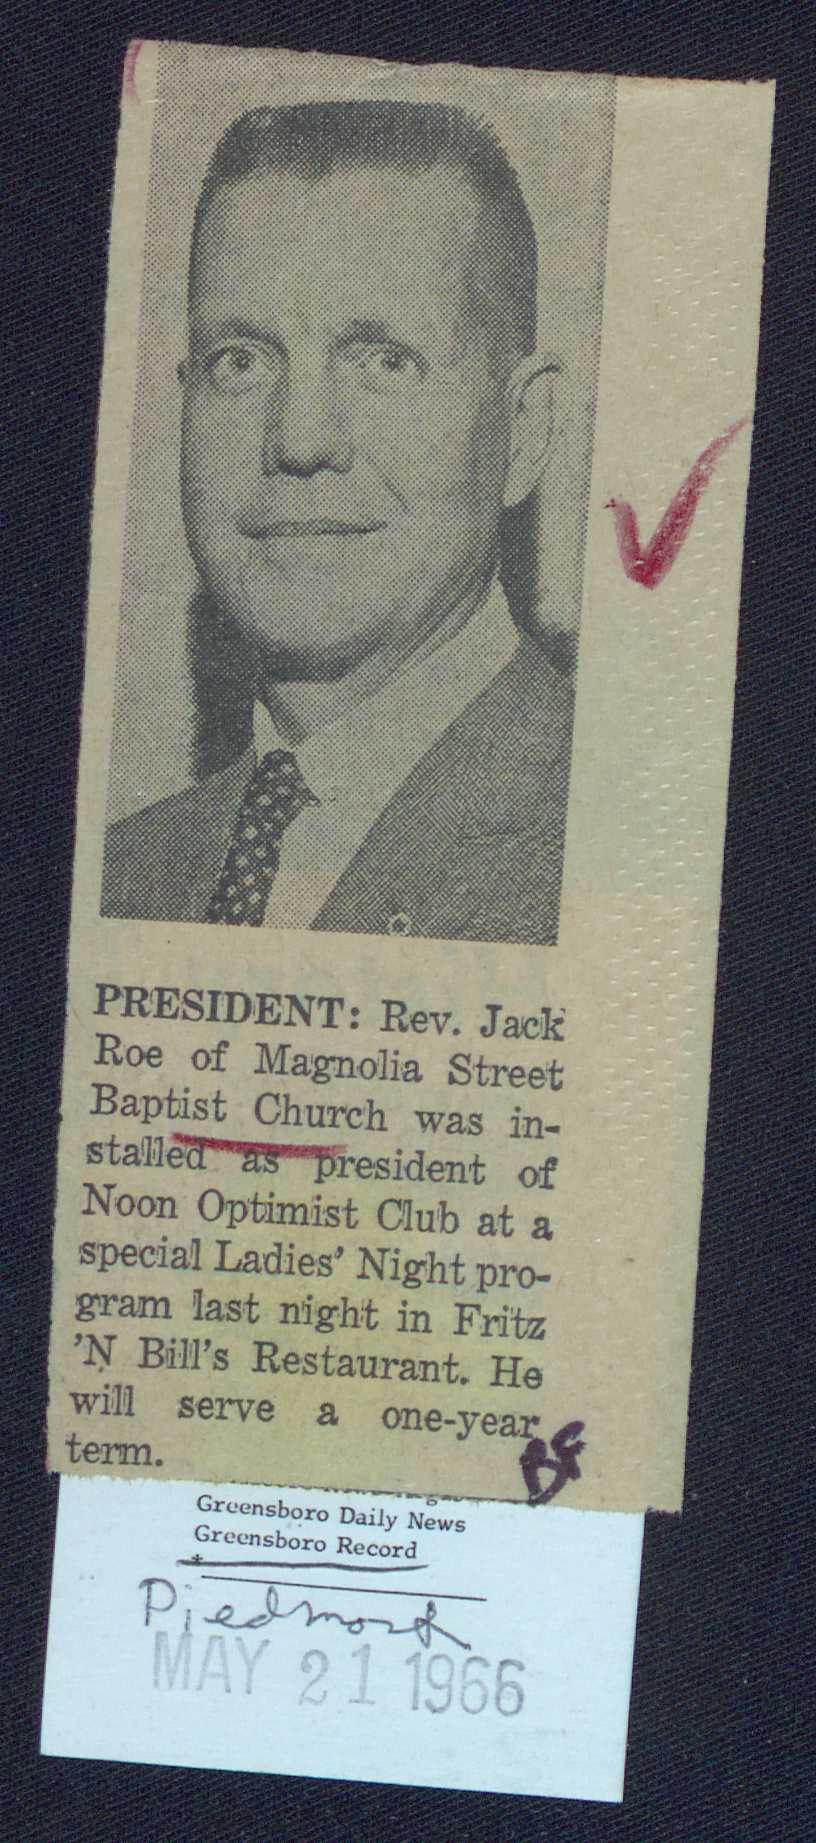 PRESIDENT: Rev. Jaicli Roe of Magnolia Street Baptist Church was insta~aetr Ji!